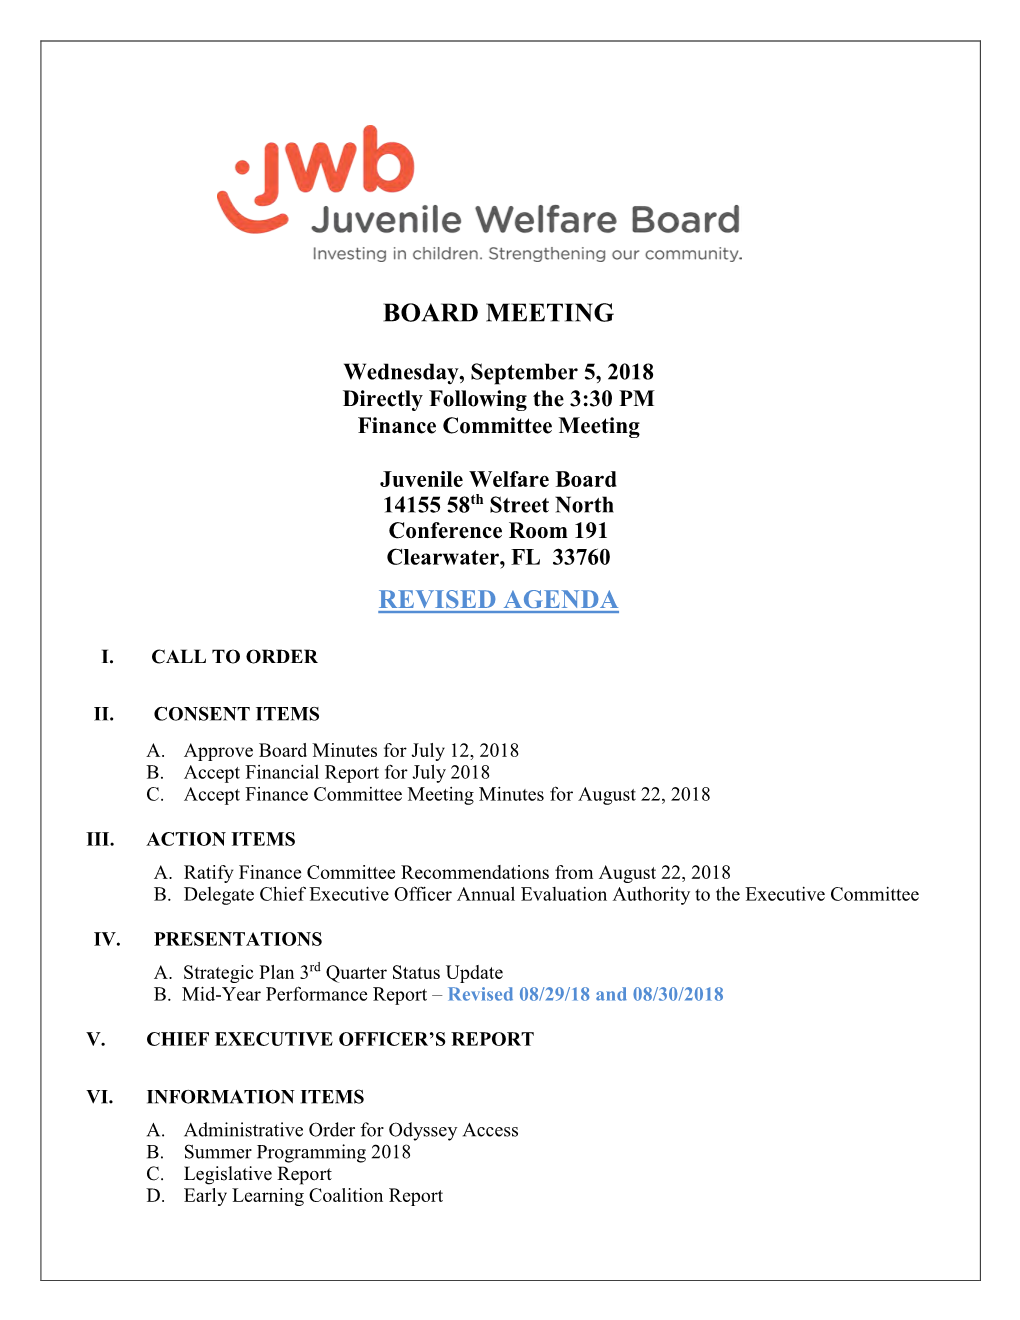 Board Meeting Revised Agenda